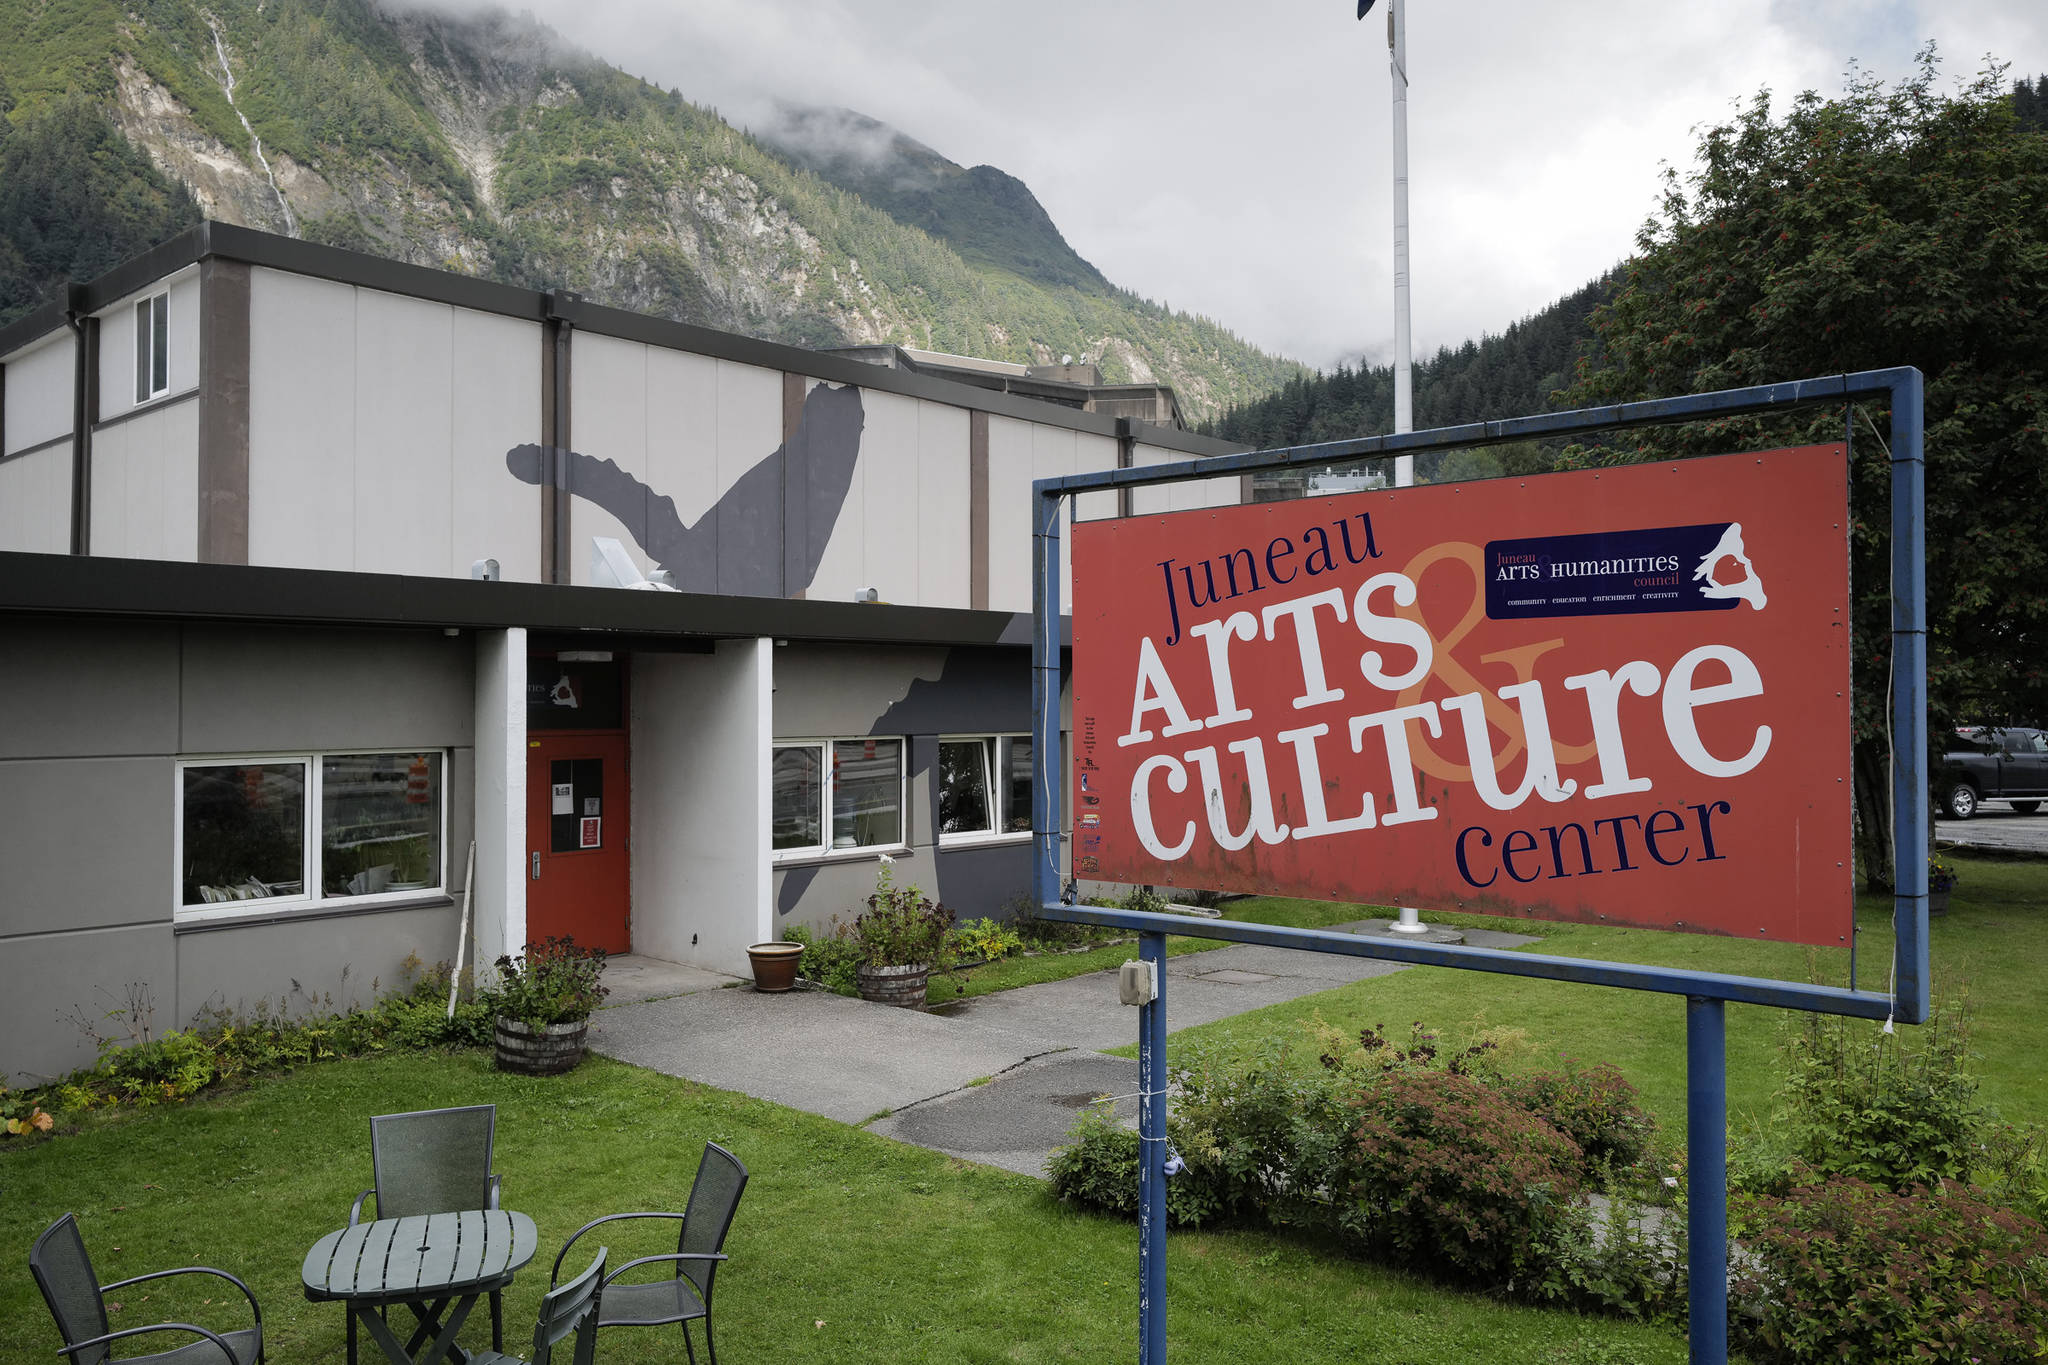 The Juneau Arts & Culture Center on Tuesday, Aug. 27, 2019. (Michael Penn | Juneau Empire)